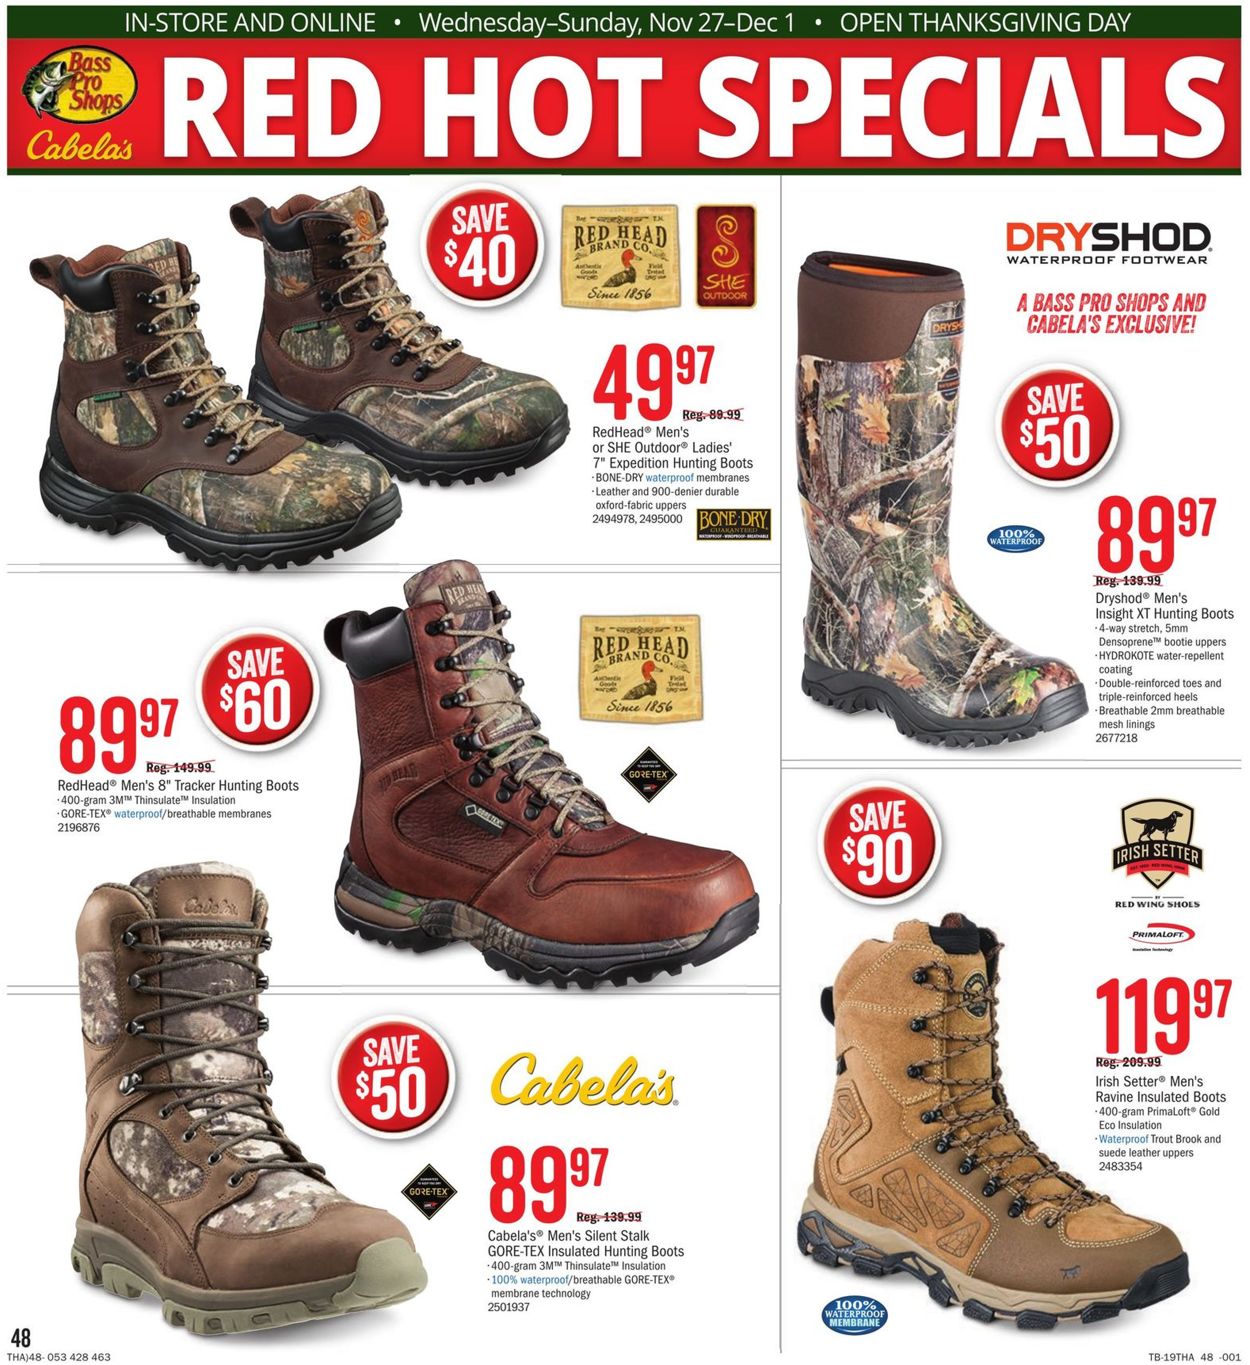 redhead 8 tracker boots